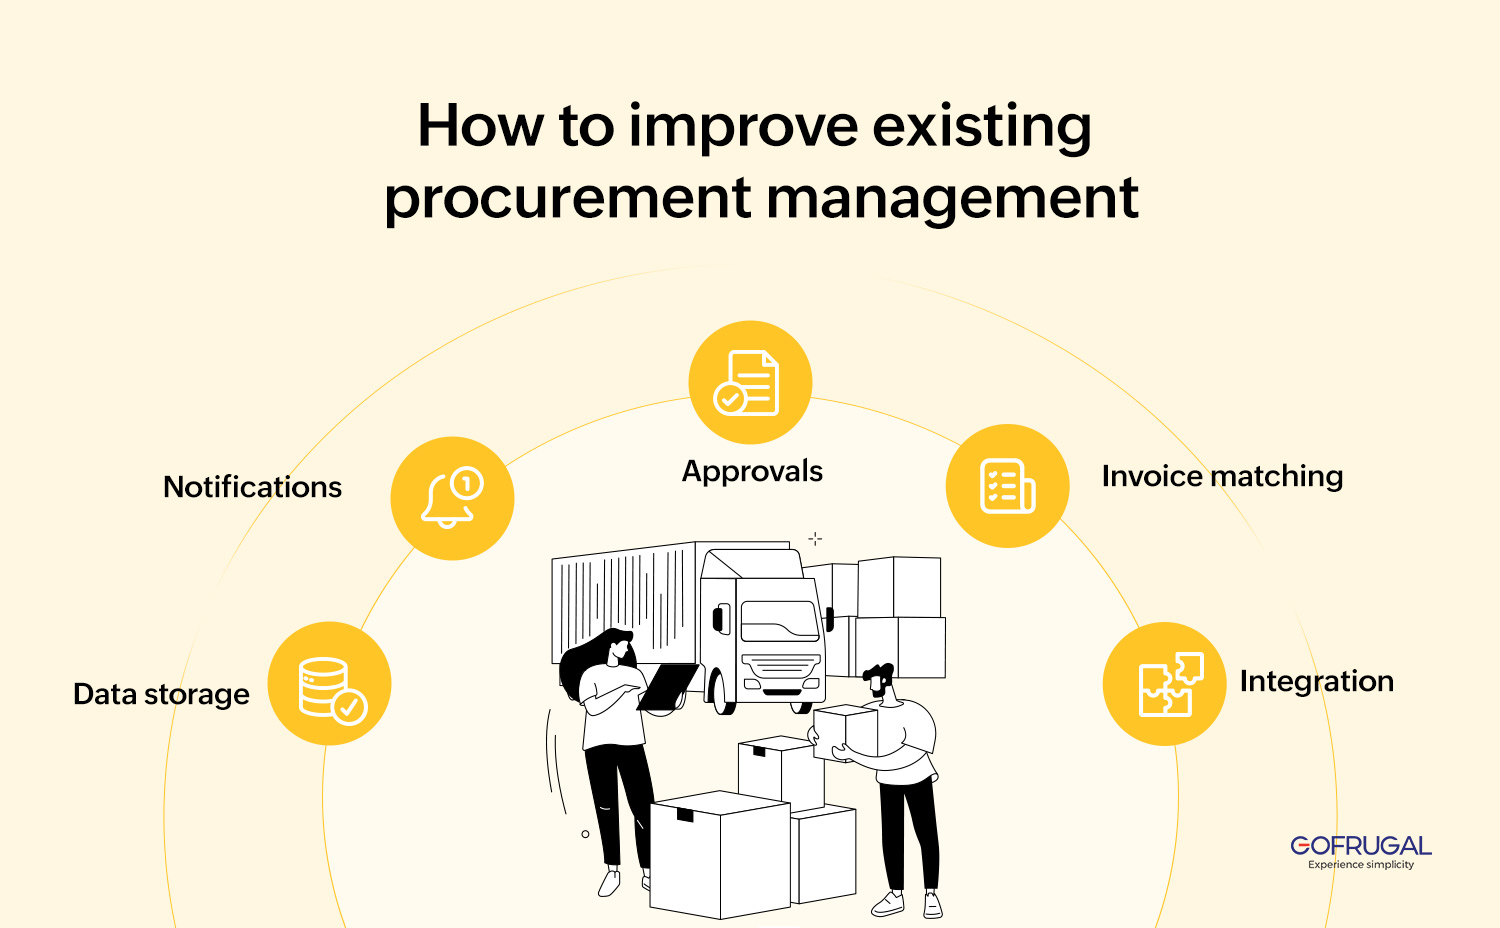 How to improve existing procurement management